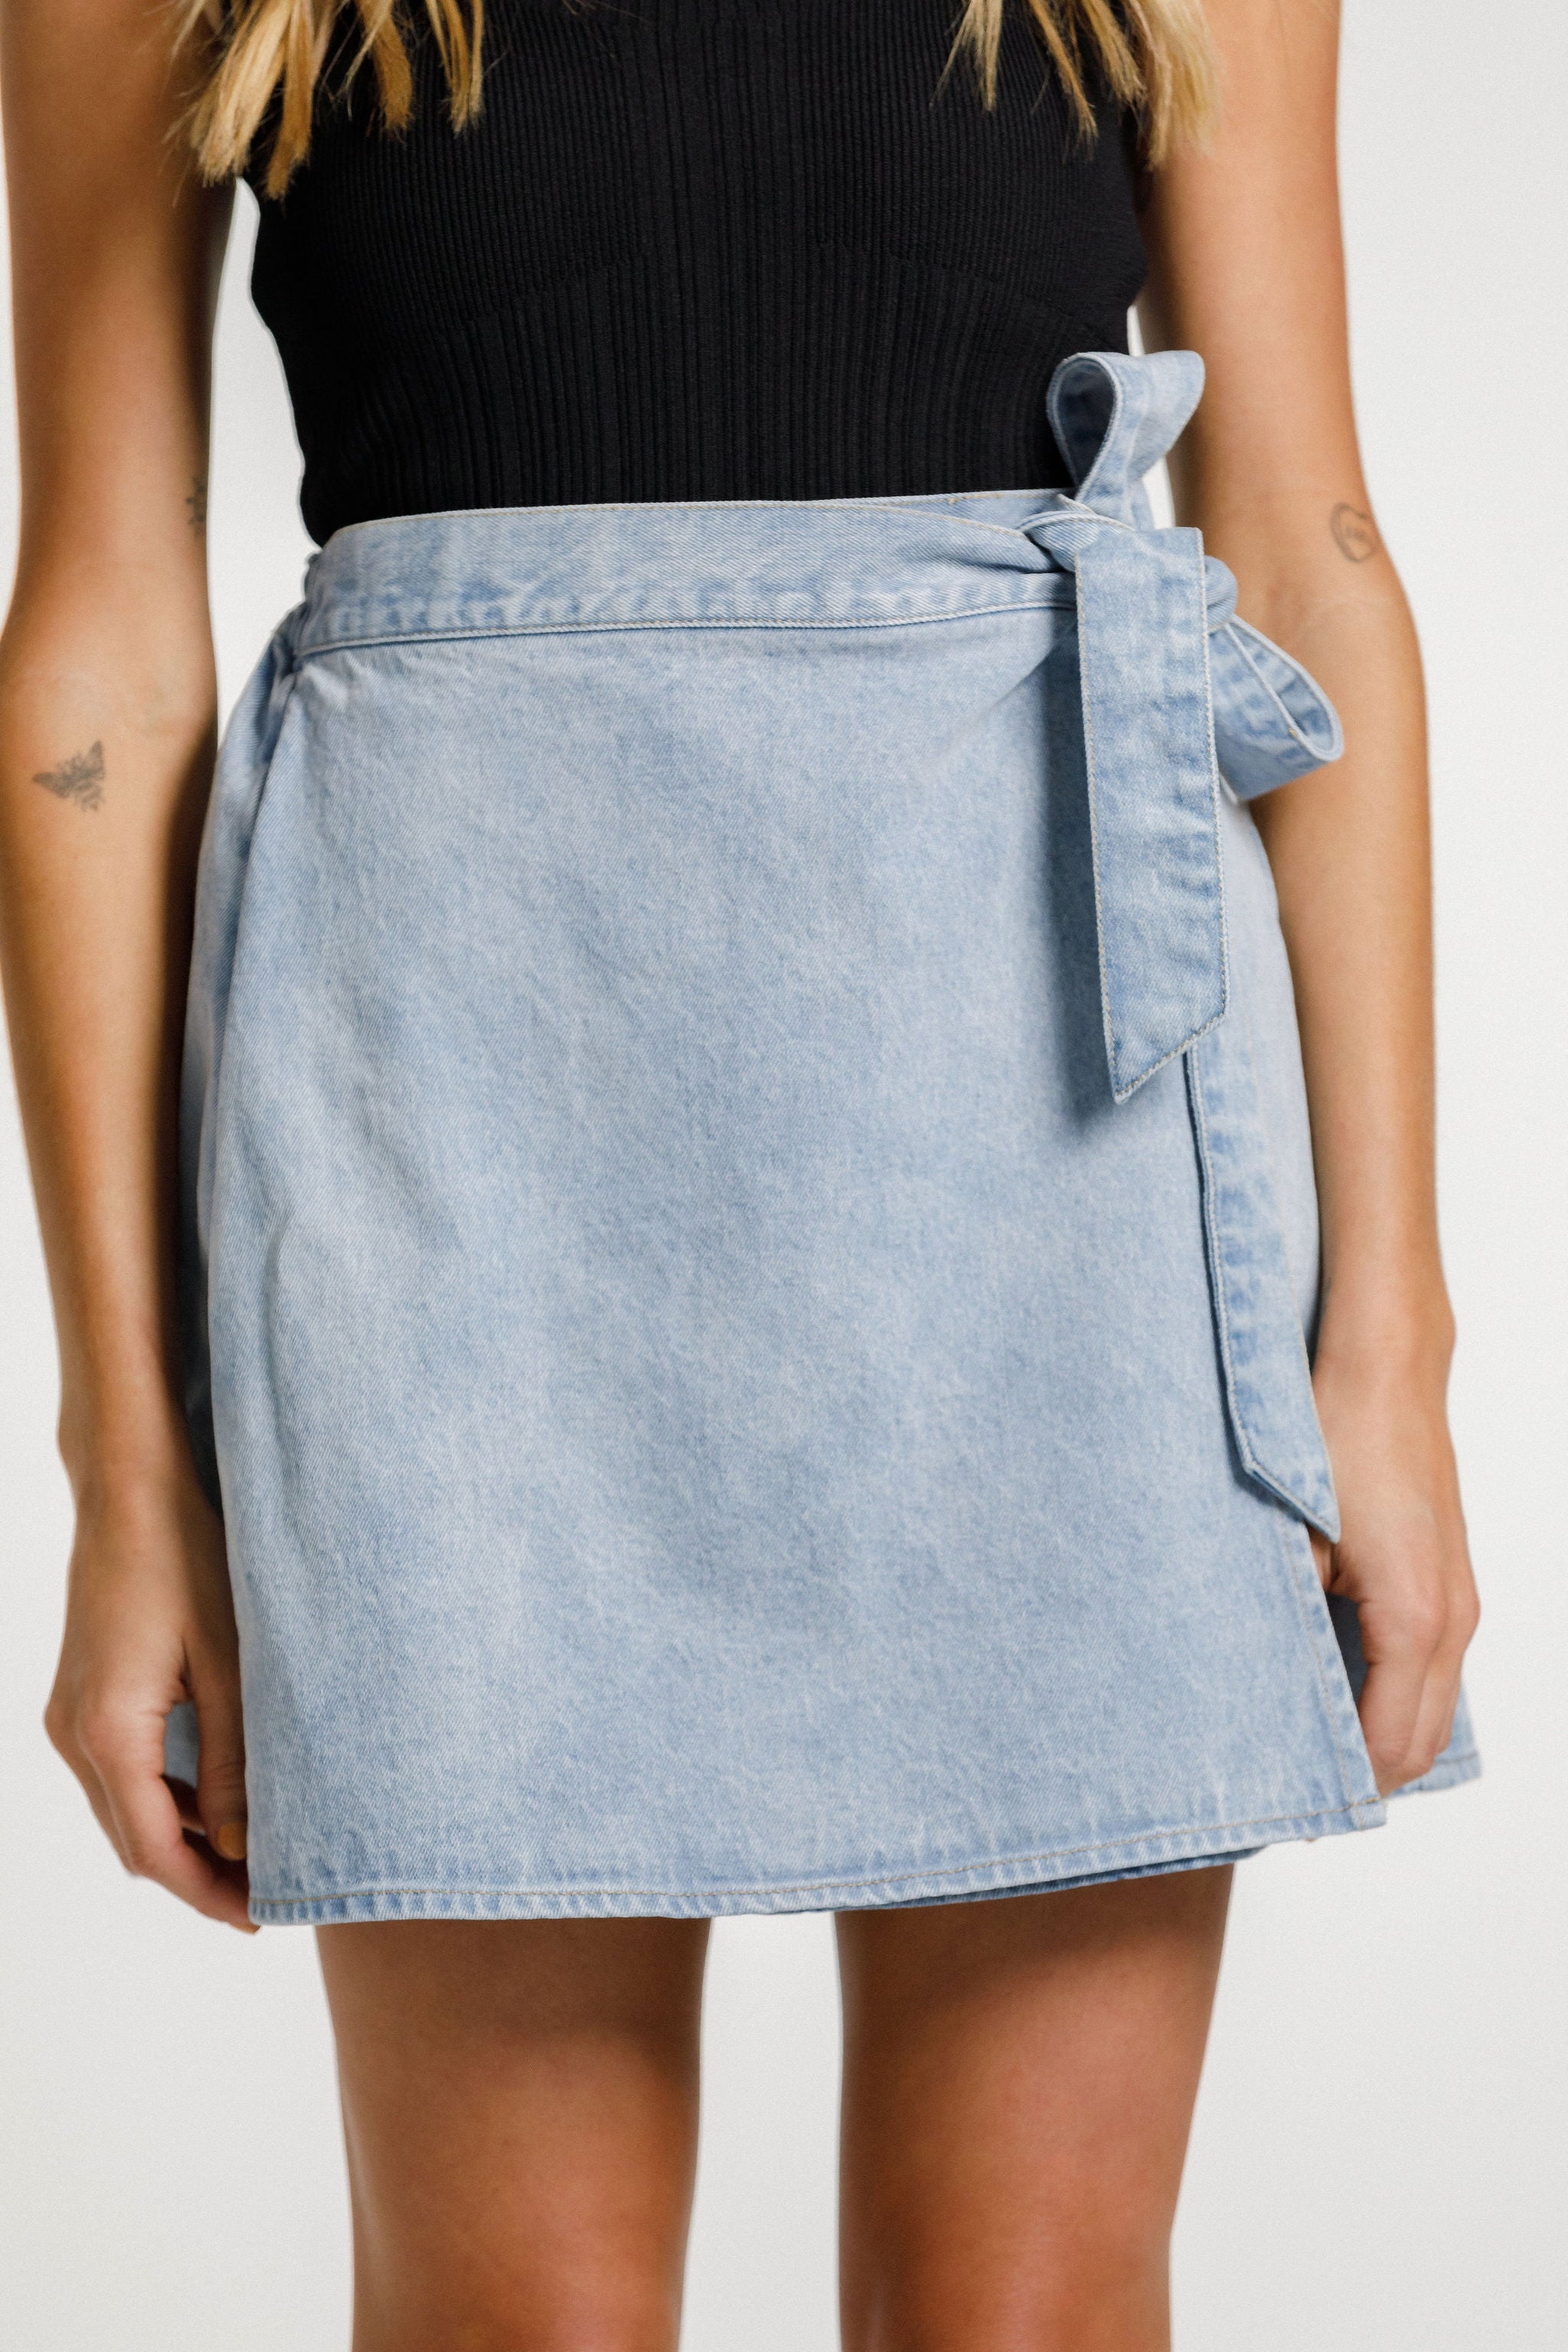 Lib Skirt - Stone Wash Denim